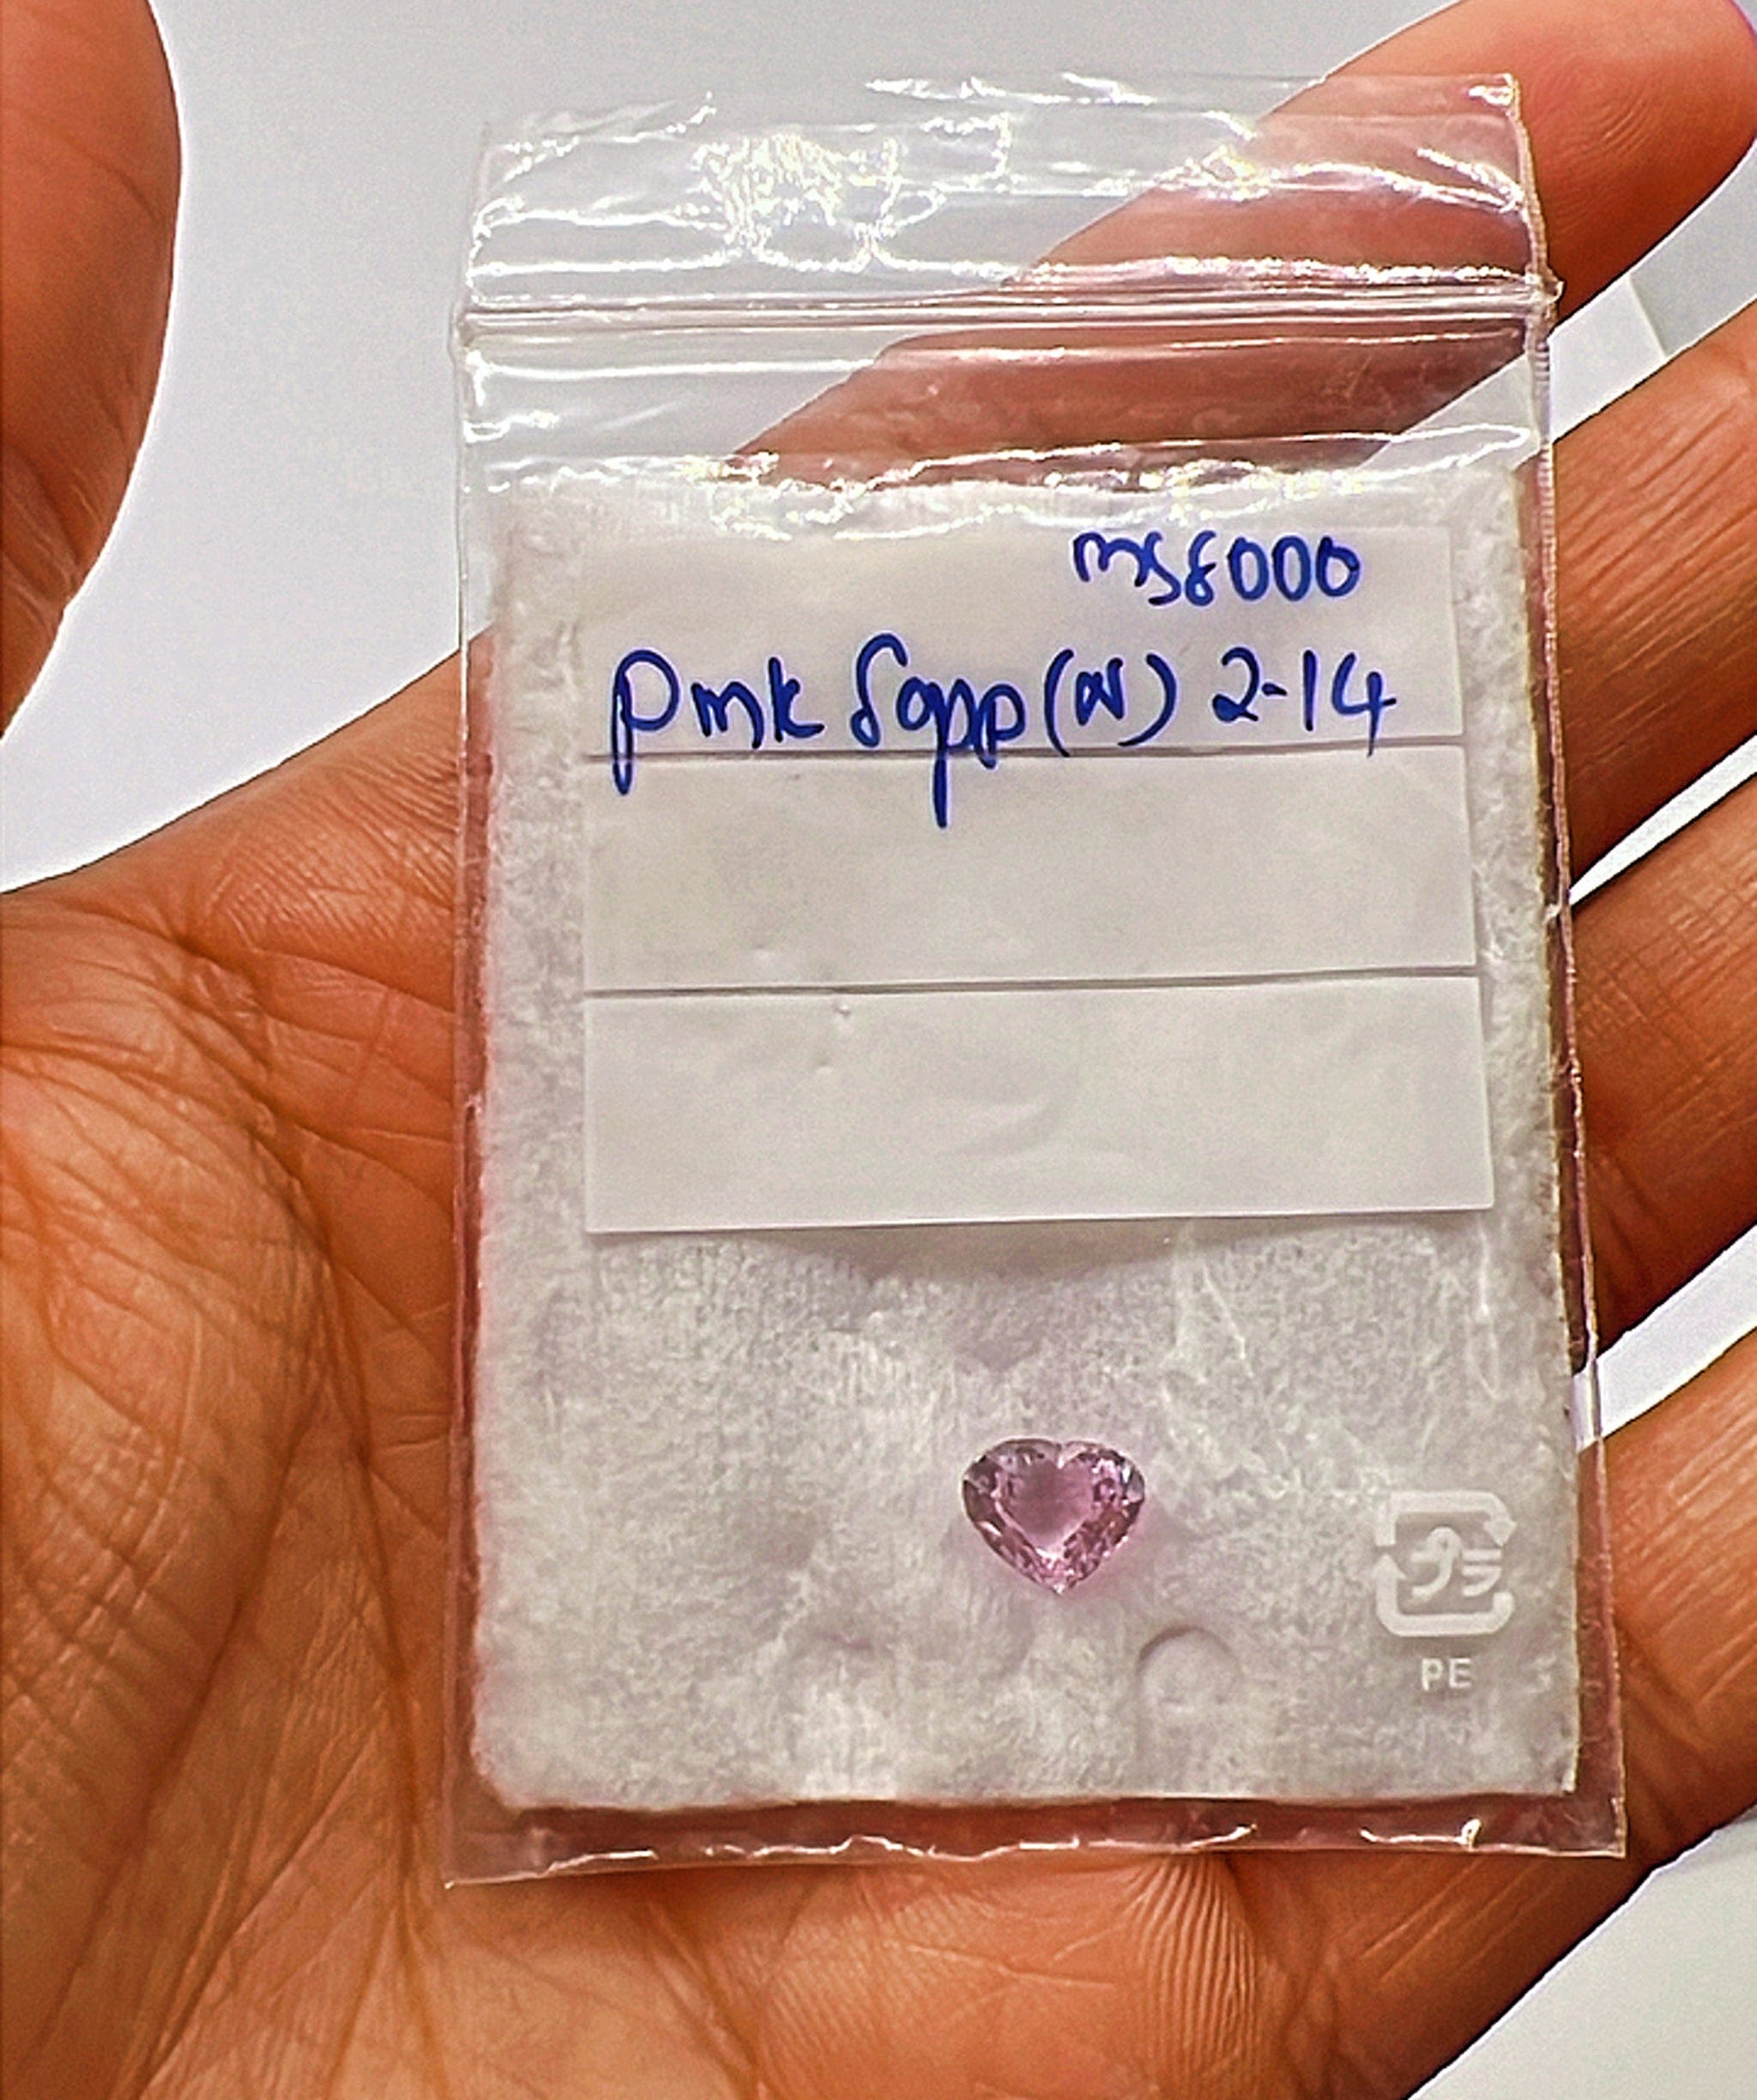 Luxury Promise Pink Sapphire (N) 2.14 MS 8000